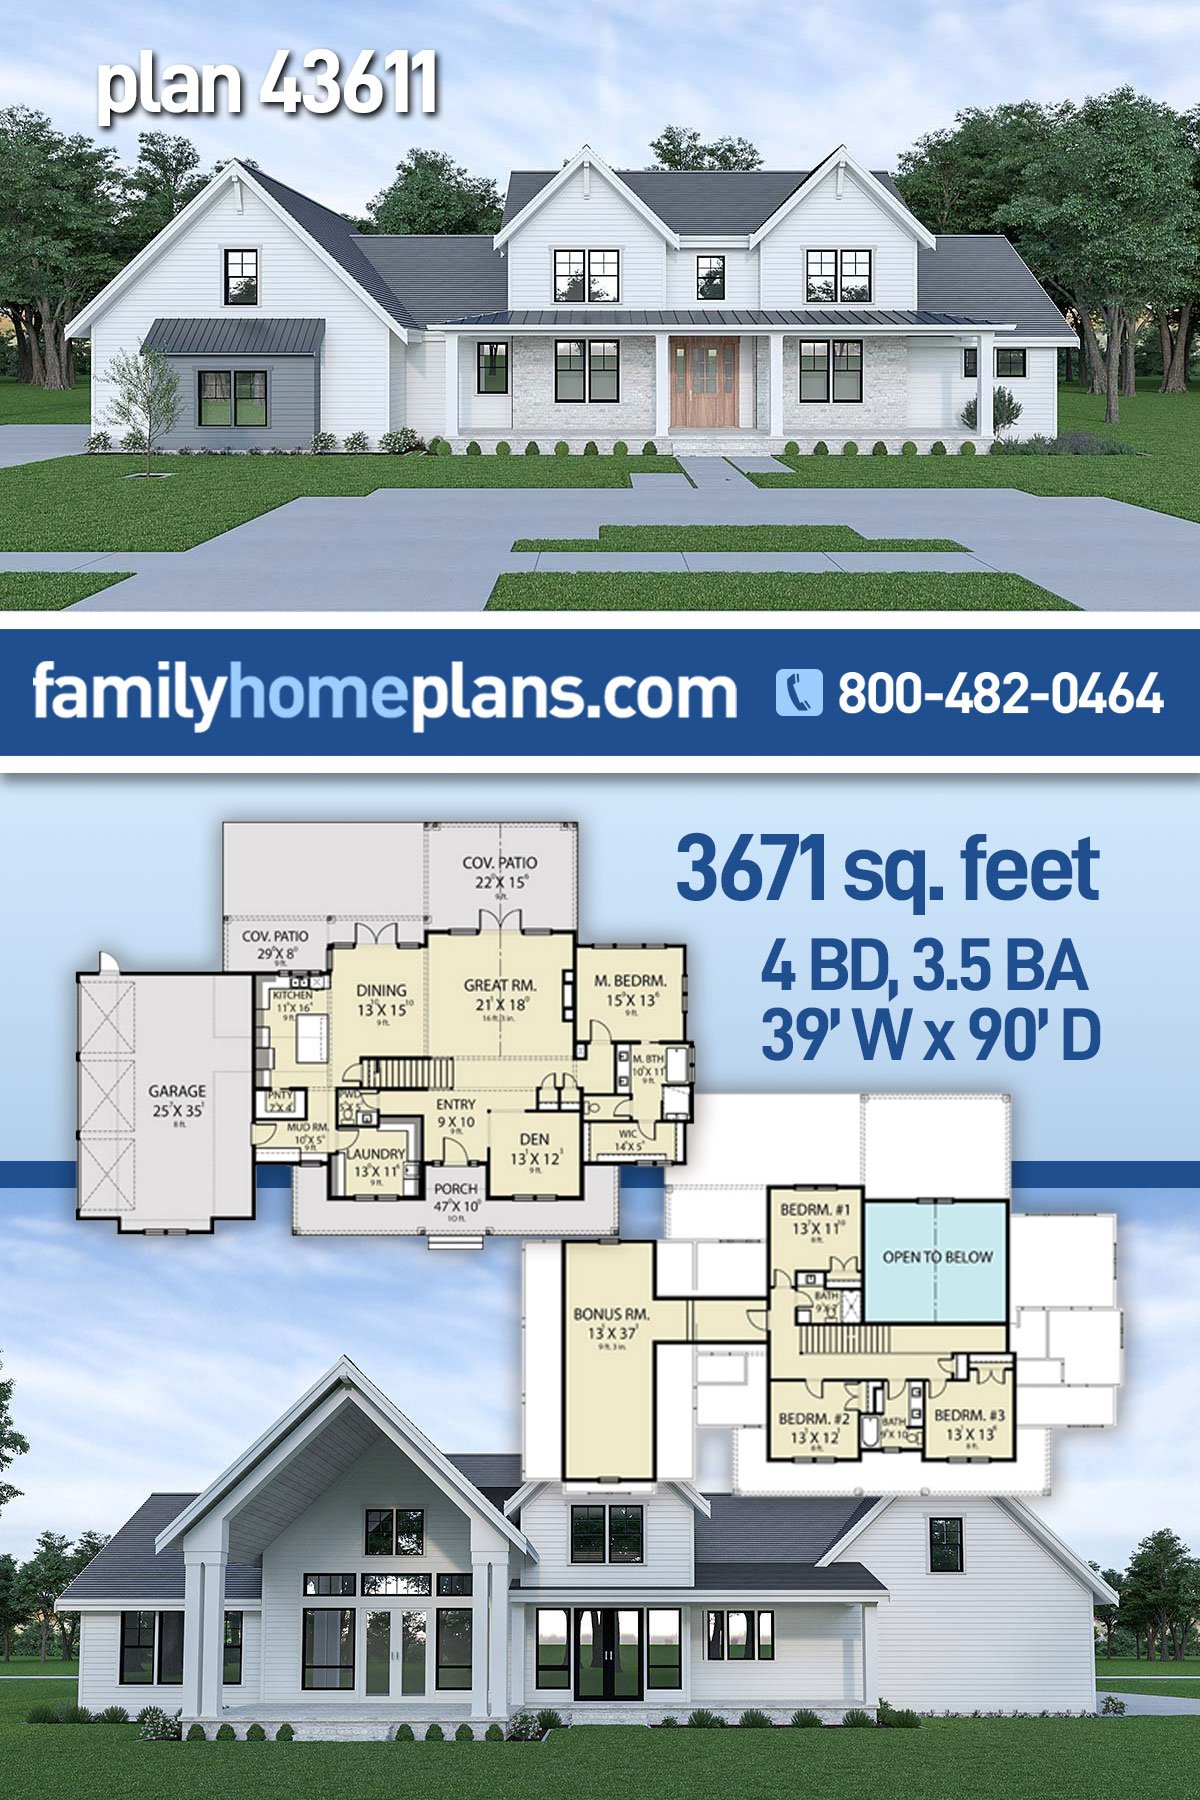 House Plan 43611